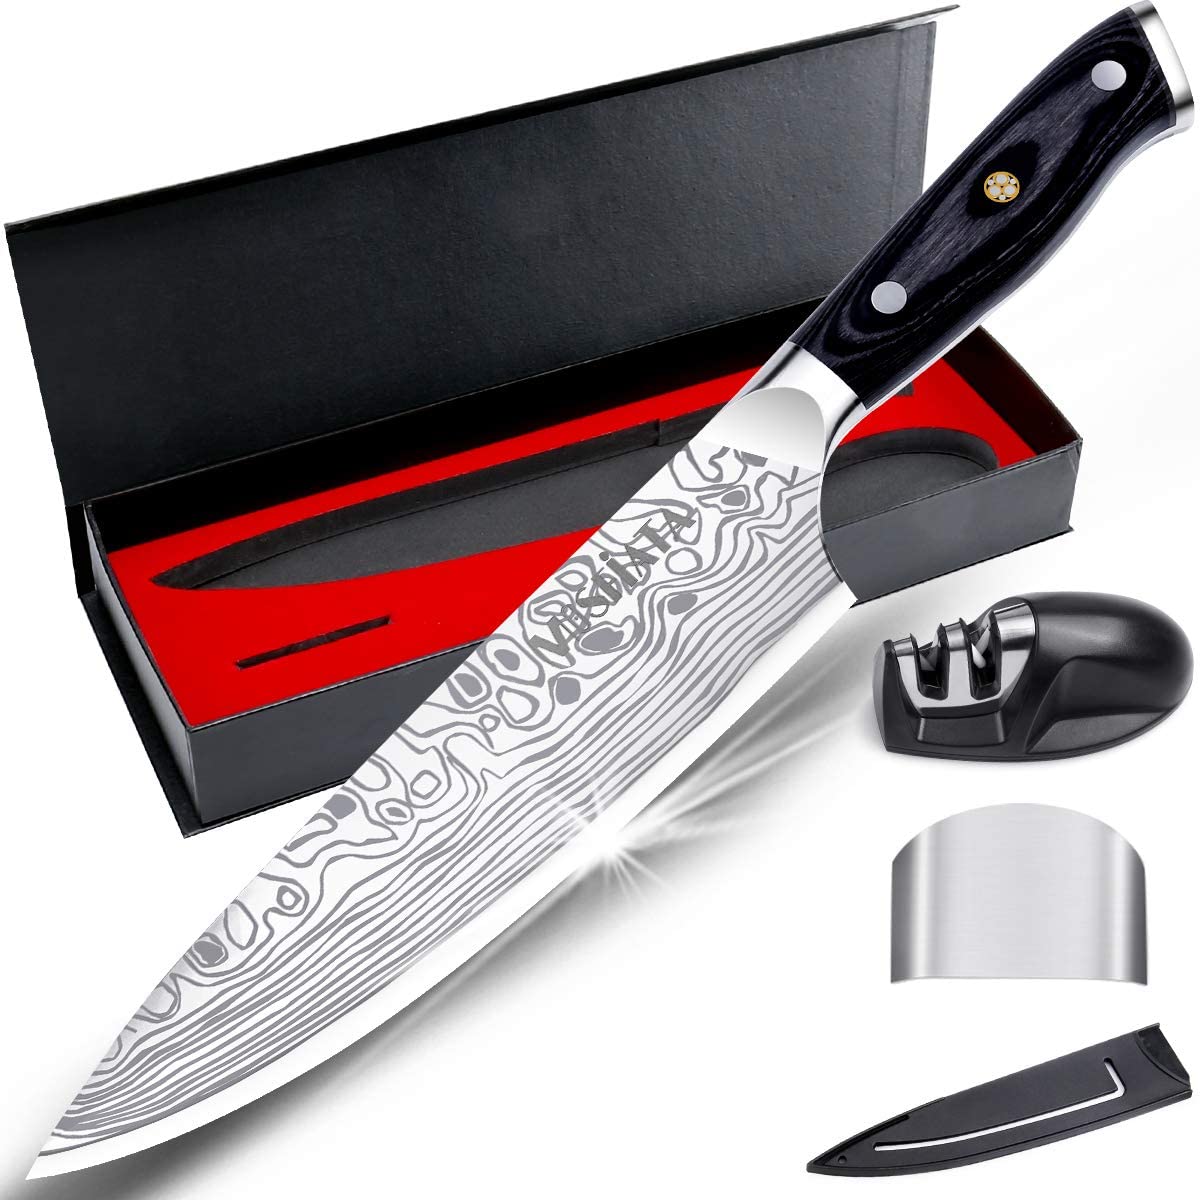 MOSFiATA Anti-Corrosion Ergonomic Chef Knife, 8-Inch